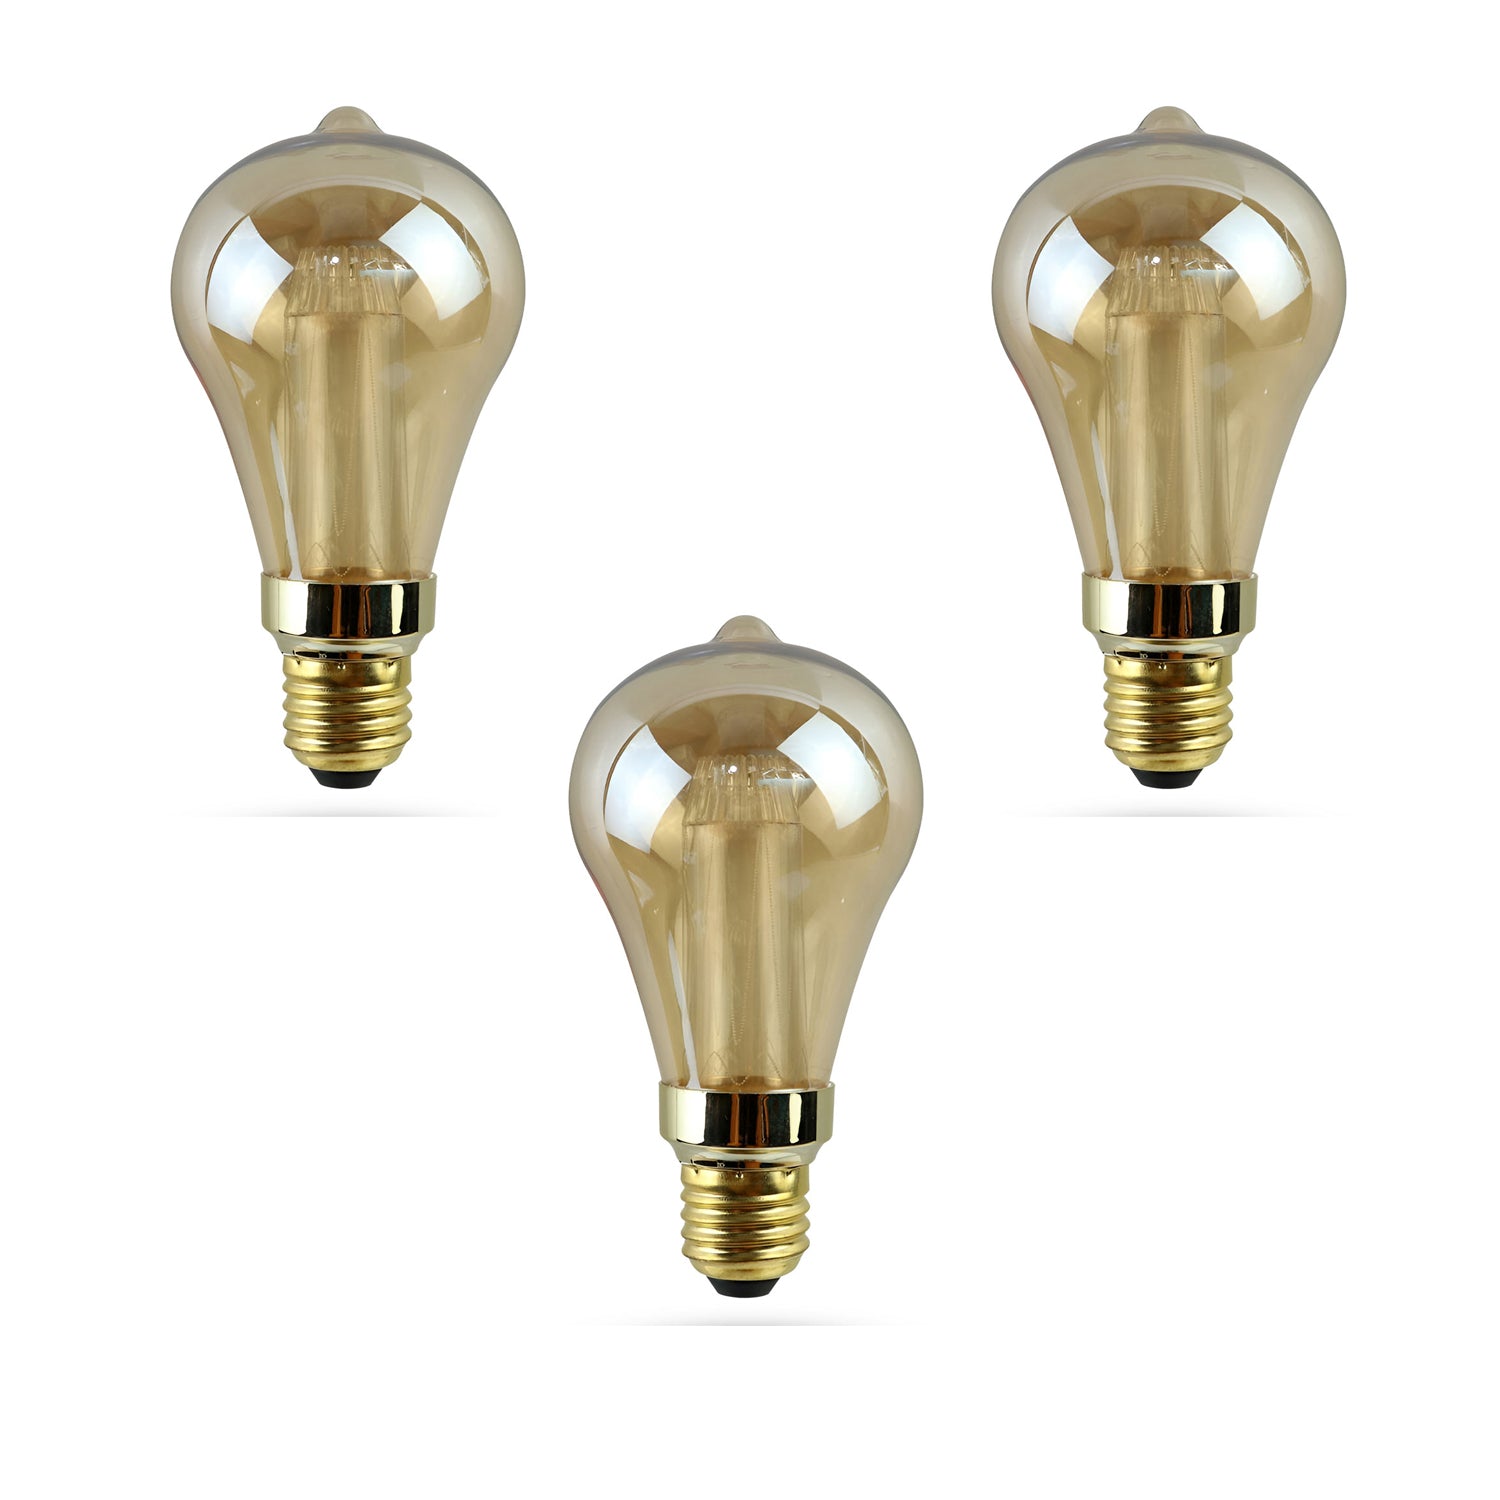 E27 Vintage Edison light bulb 3W Non dimmable filament bulb-3 Pack